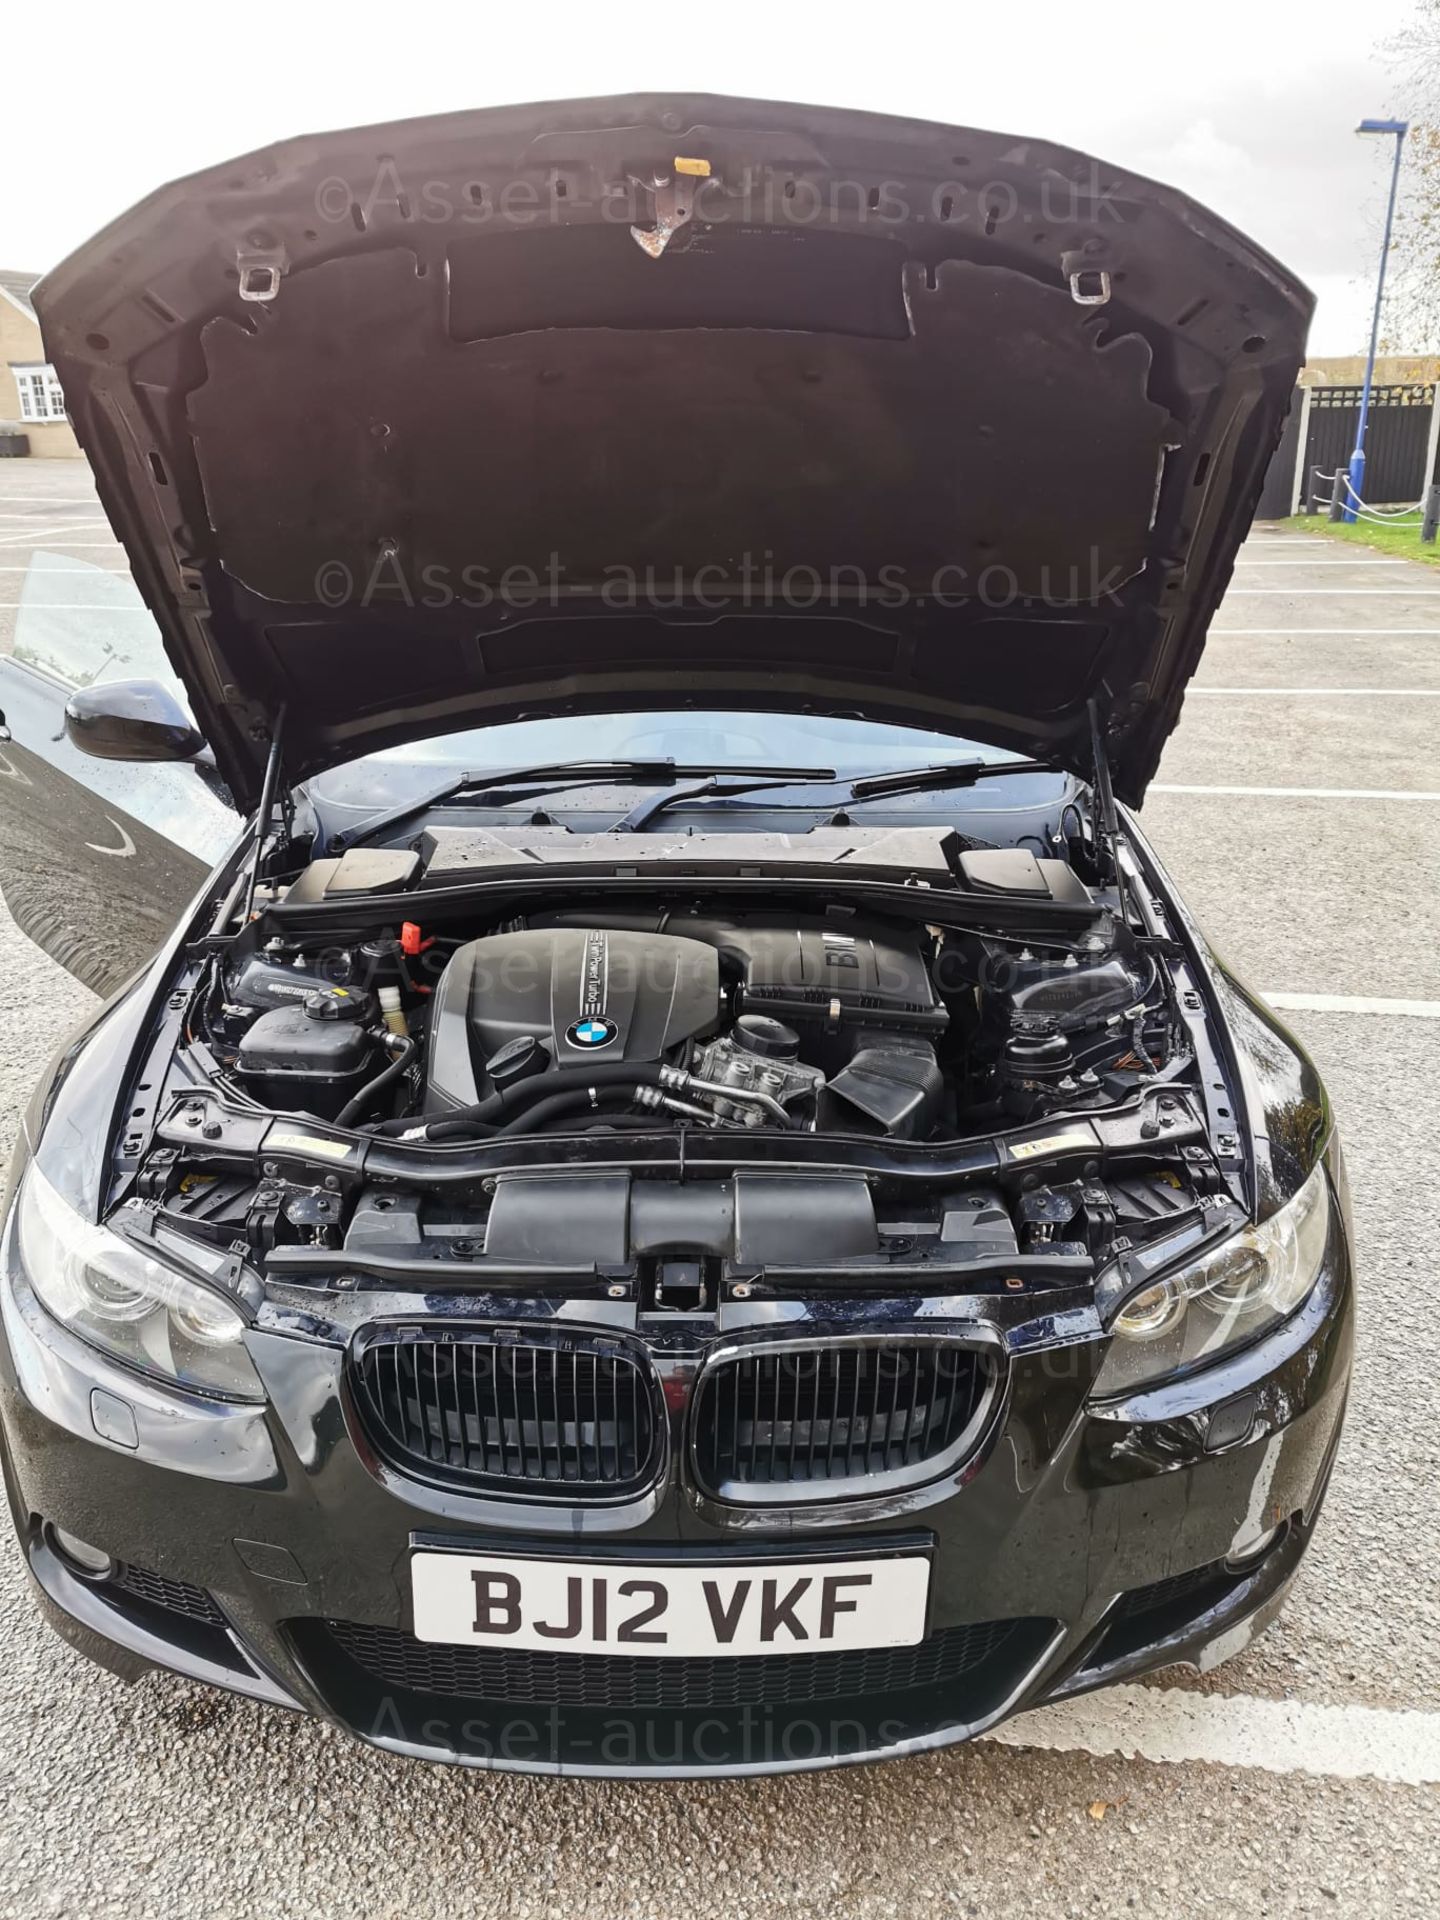 2012 BMW 335I SPORT PLUS EDITION BLACK COUPE, 164,779 MILES, 3.0 PETROL ENGINE *NO VAT* - Image 14 of 29